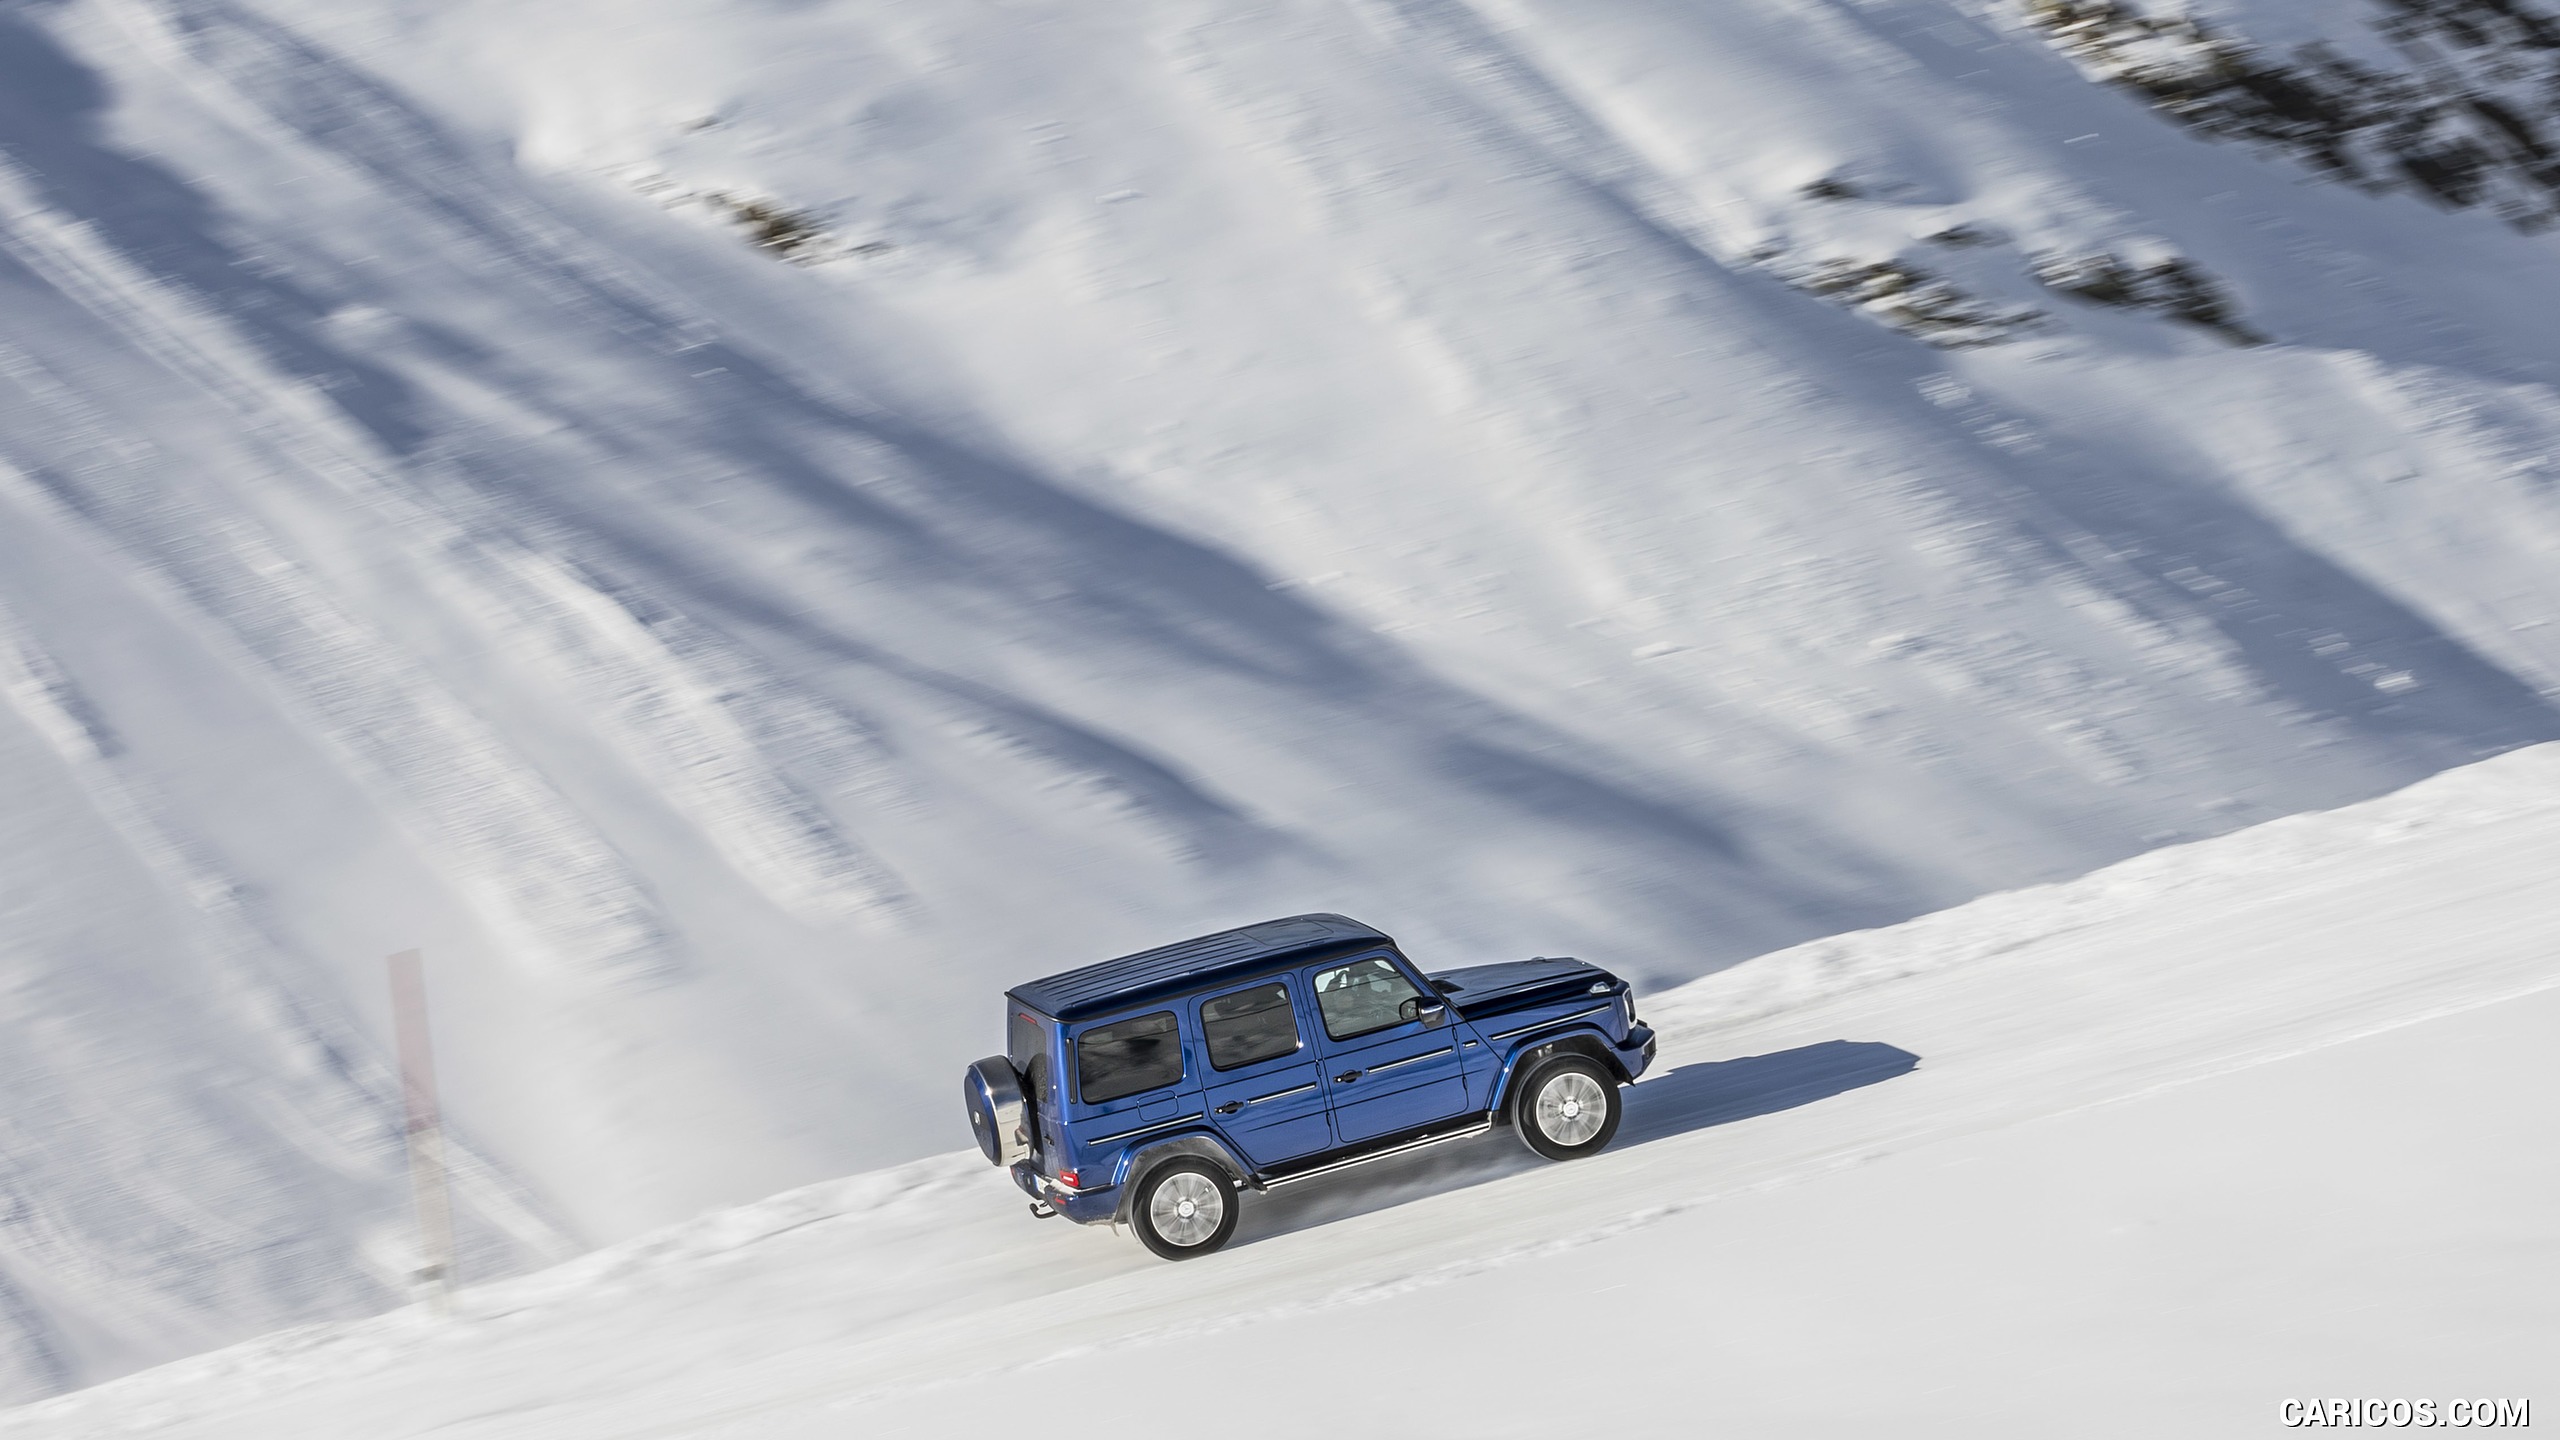 2019 Mercedes-Benz G 350 d (Brilliant Blue Metallic) - In Snow - Side, #30 of 51